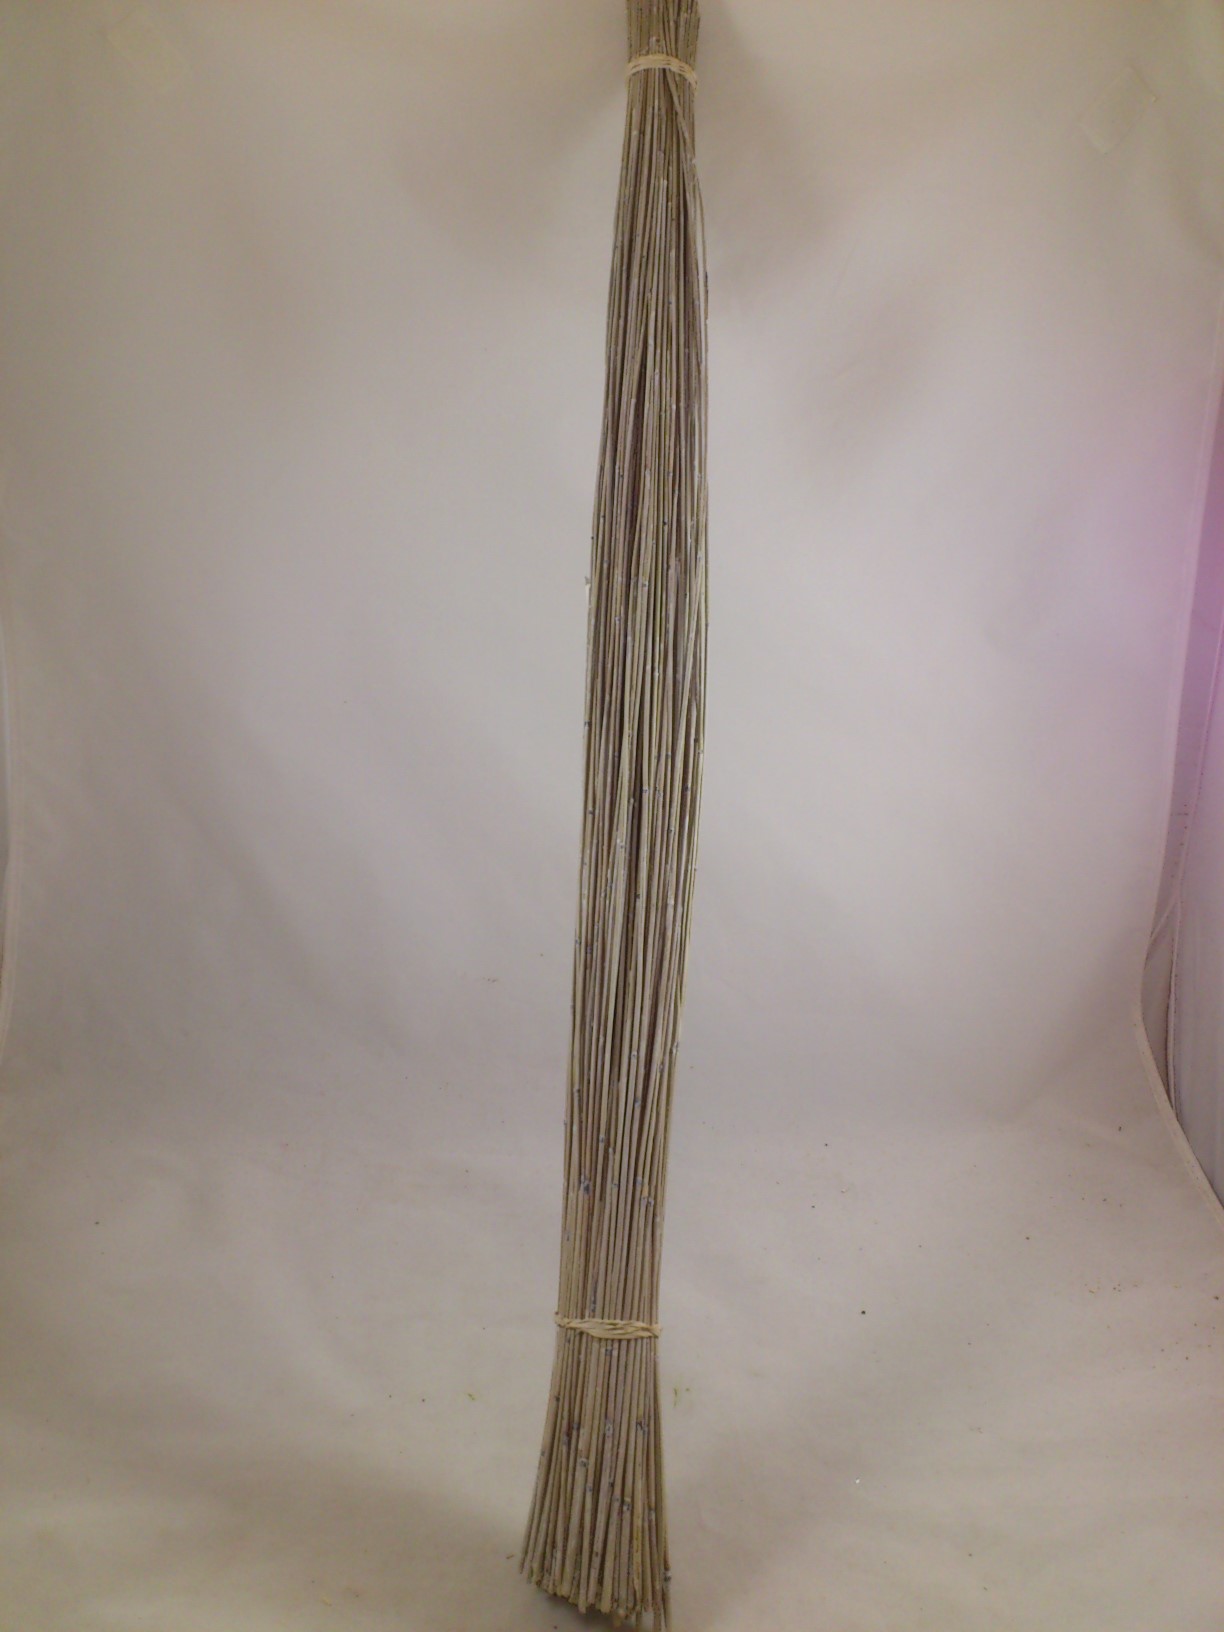 Vlei reed 400 gr. 80 cm white-wash